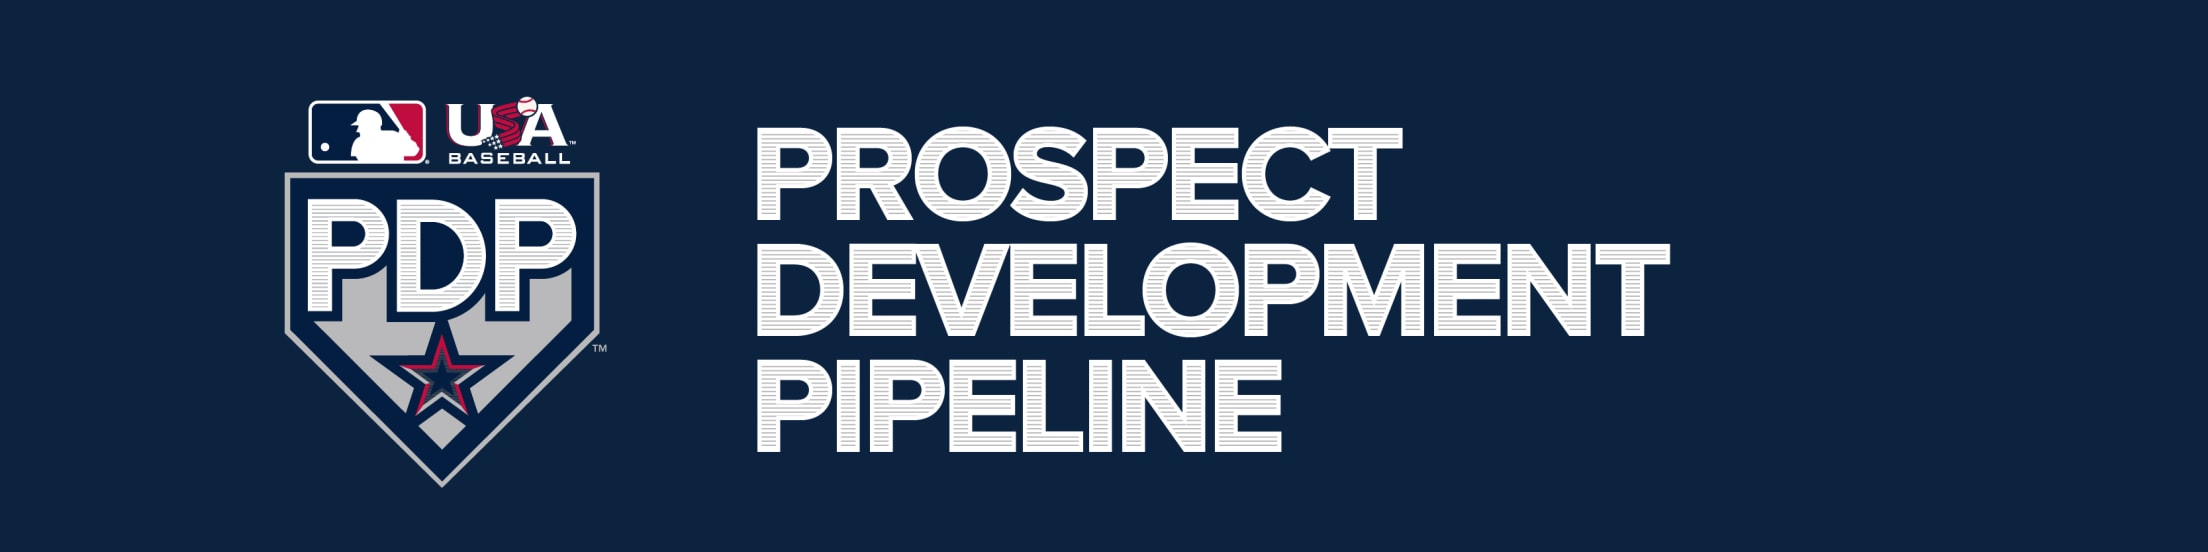 Prospect Development Pipeline